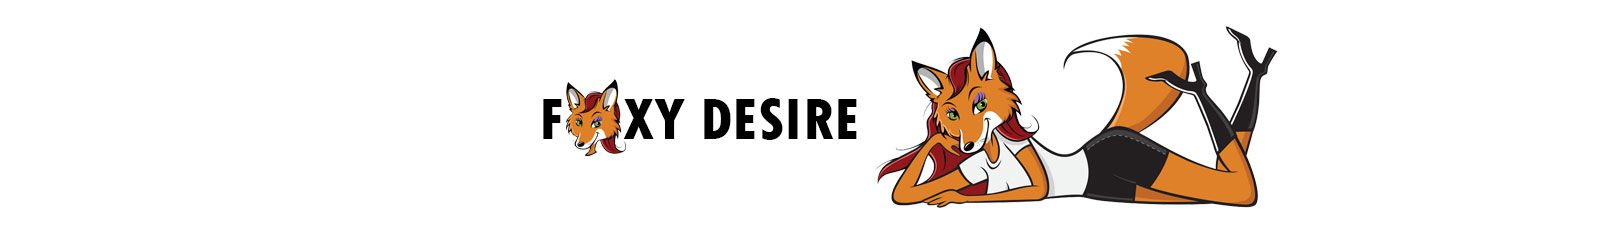 Foxy Desire